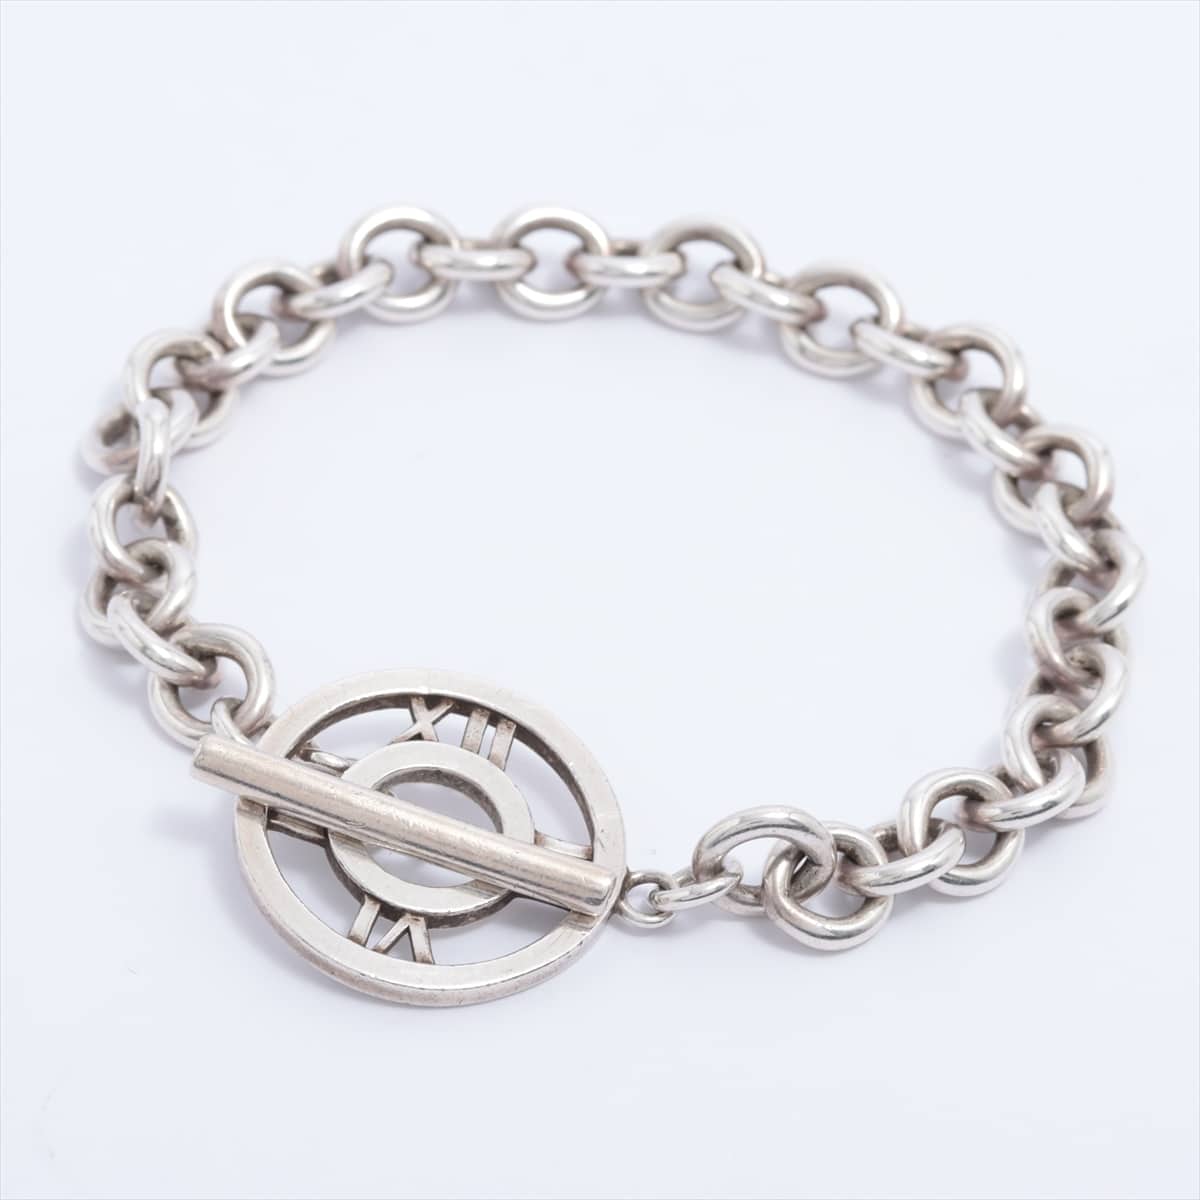 Tiffany Atlas Bracelet 925 24.5g Silver